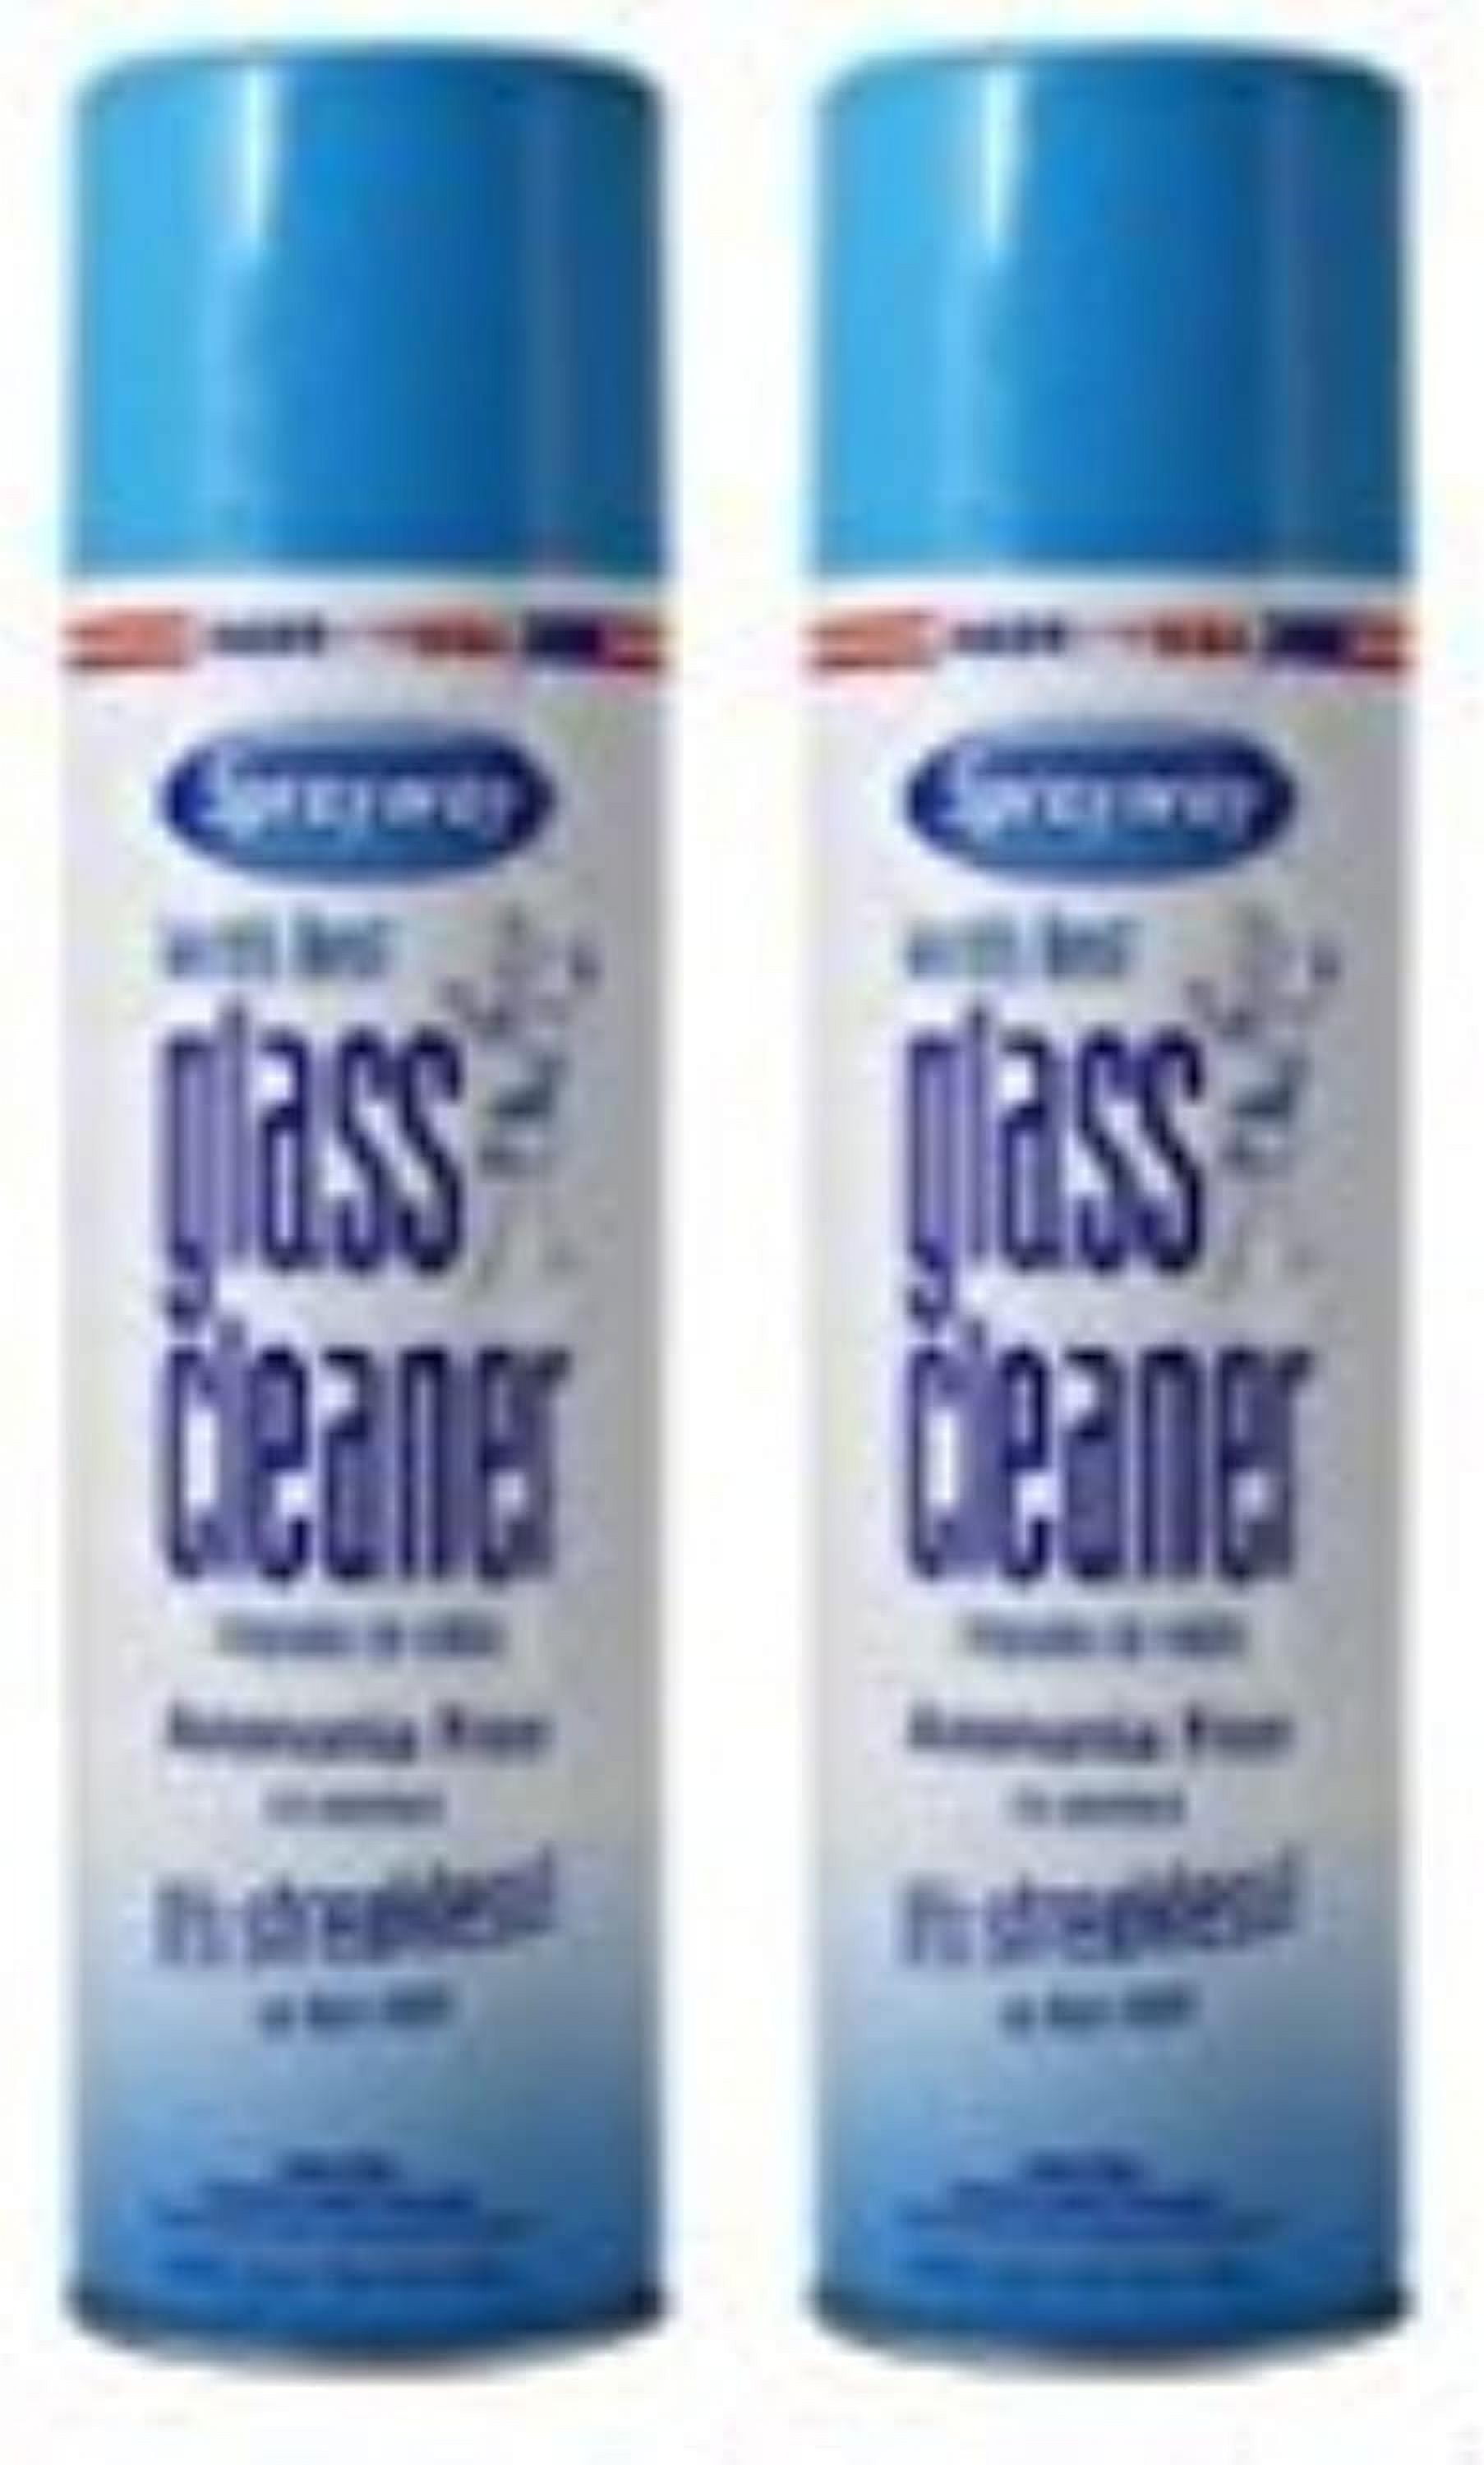  Customer reviews: Sprayway Glass Cleaner Aerosol Spray